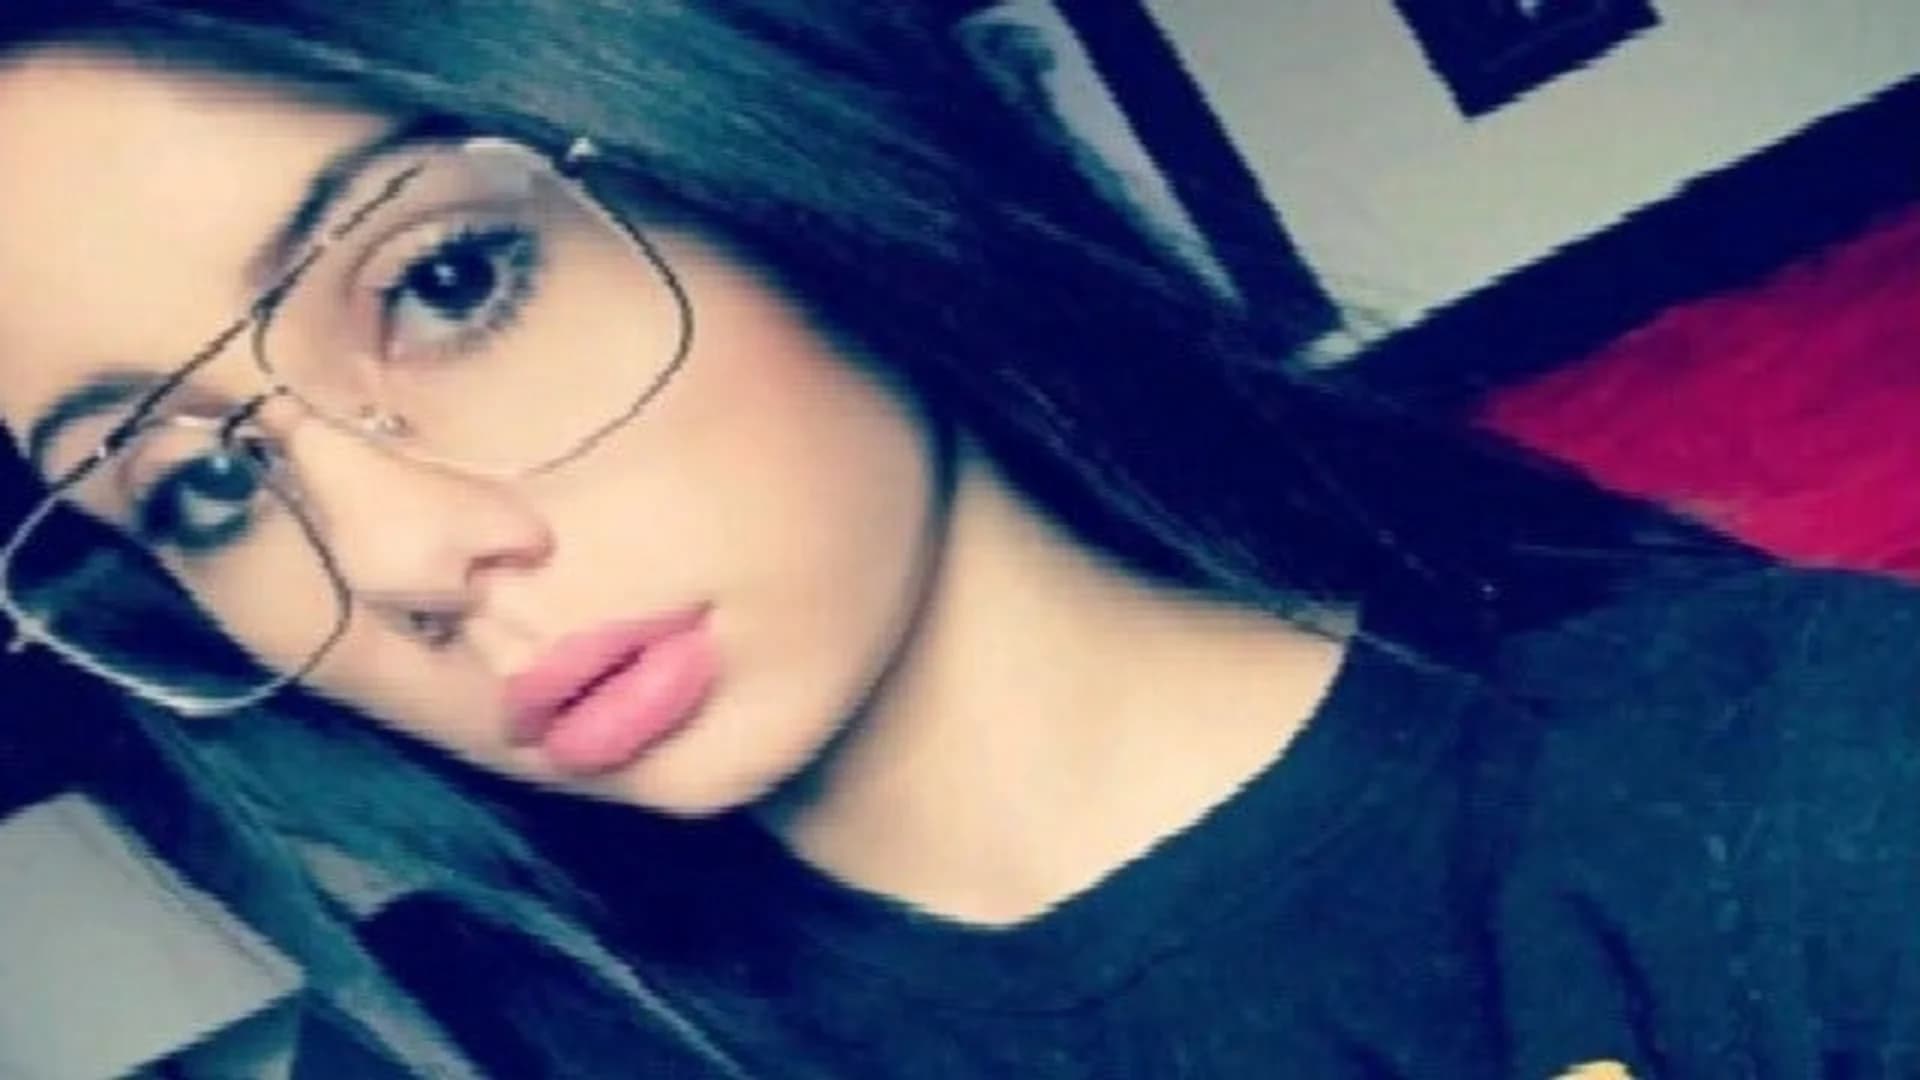 Police seek public’s help to find Newark teen missing since December